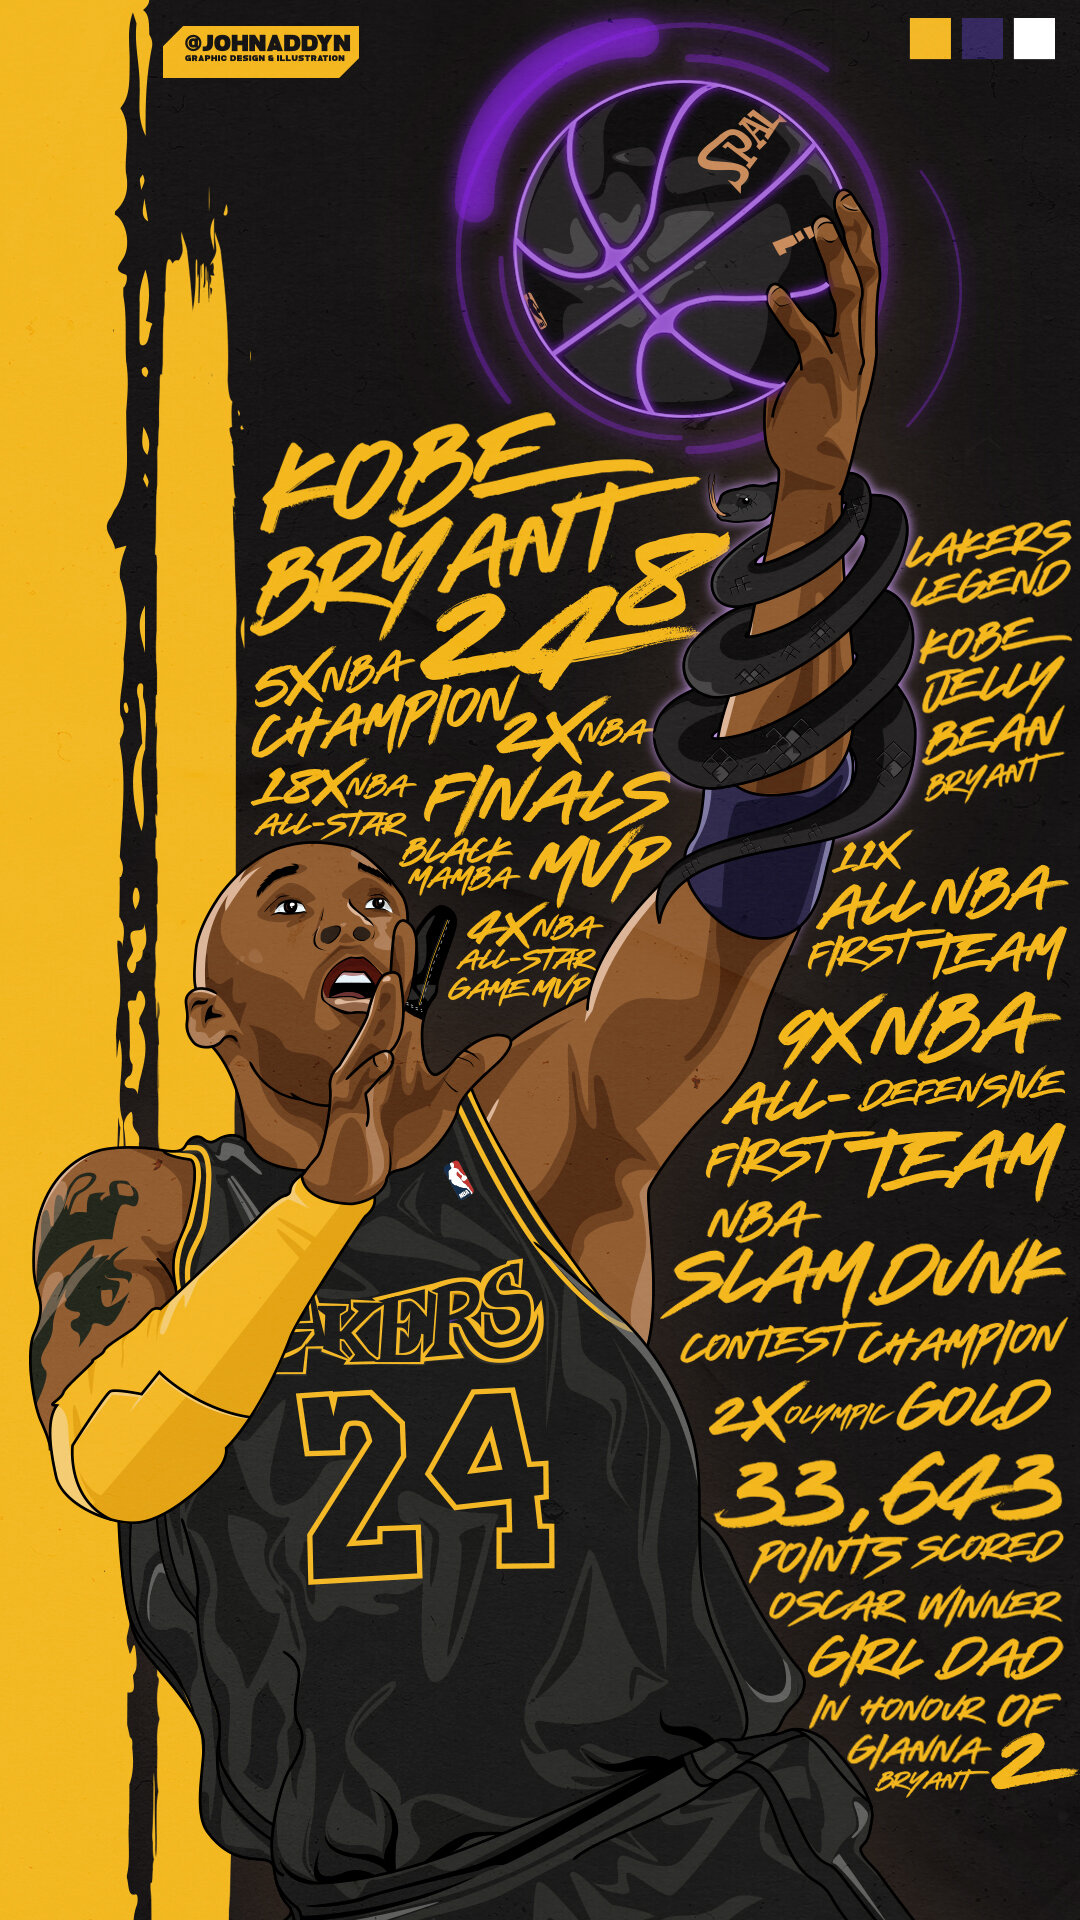 Kobe Bryant Wallpaper — John Adedoyin